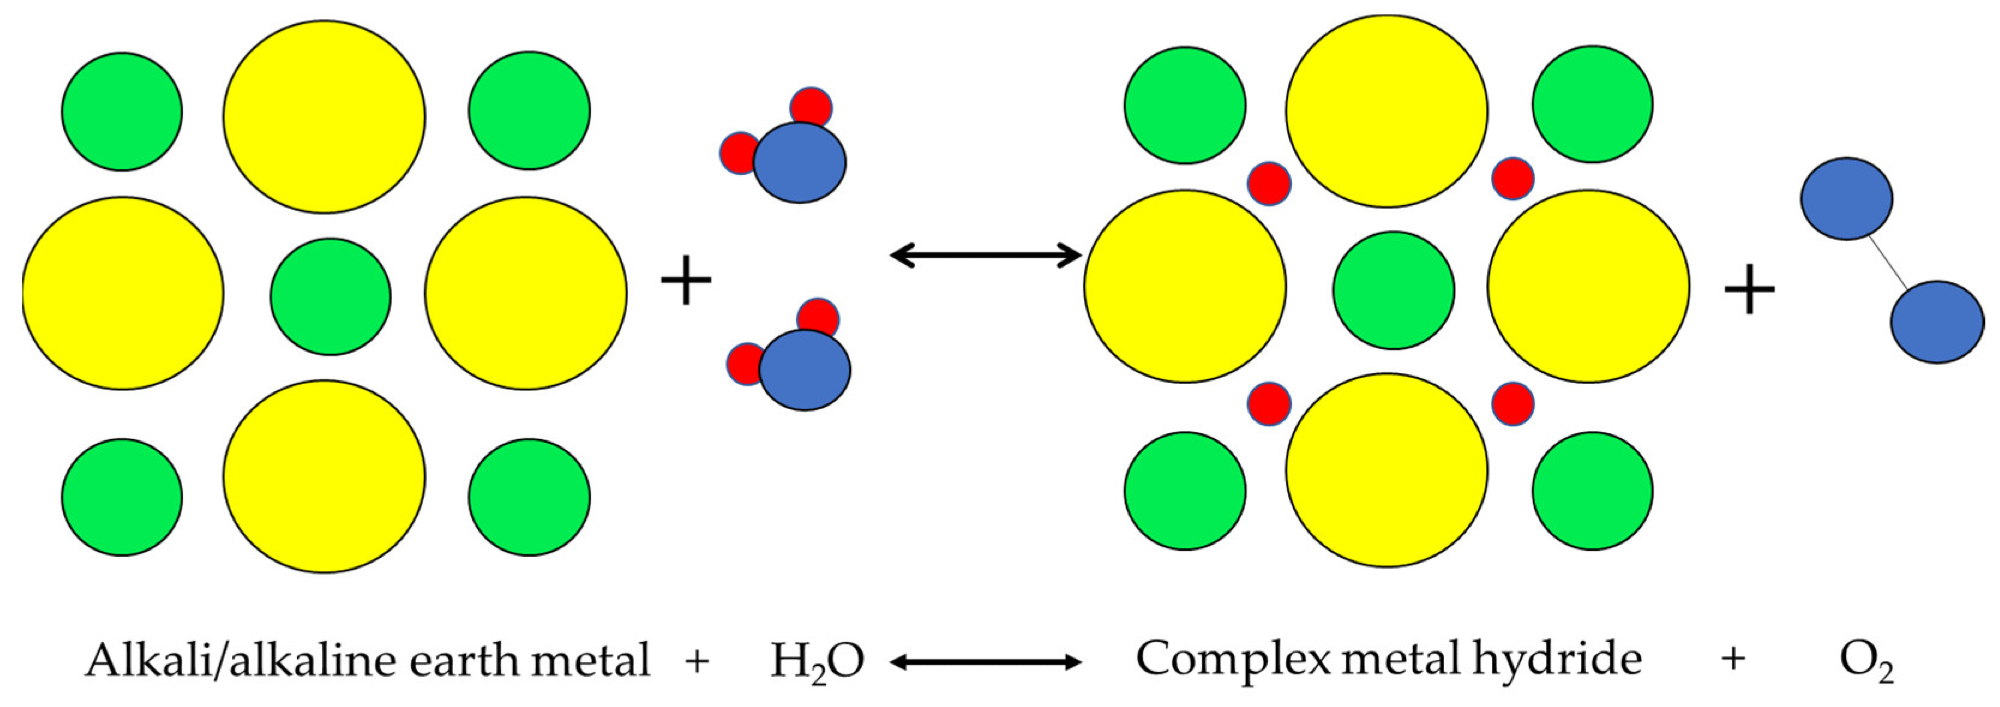 Alkalimetal+H2O physical process.